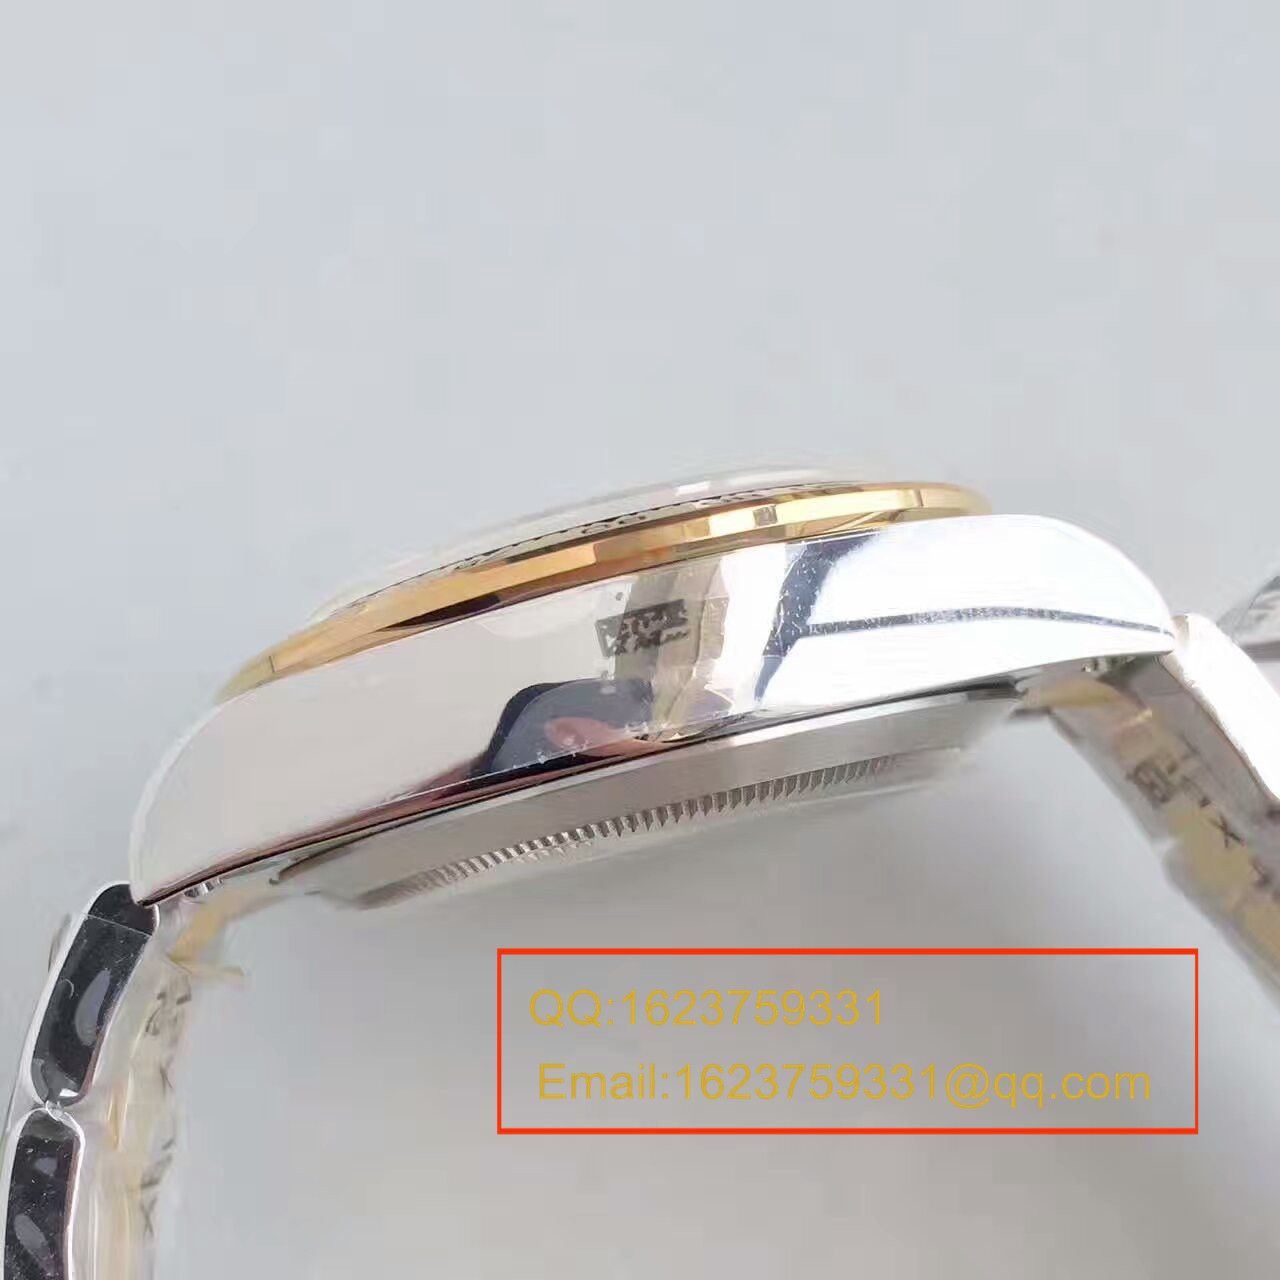 【JF厂1:1高仿手表】劳力士宇宙计型迪通拿系列116503腕表 / R128